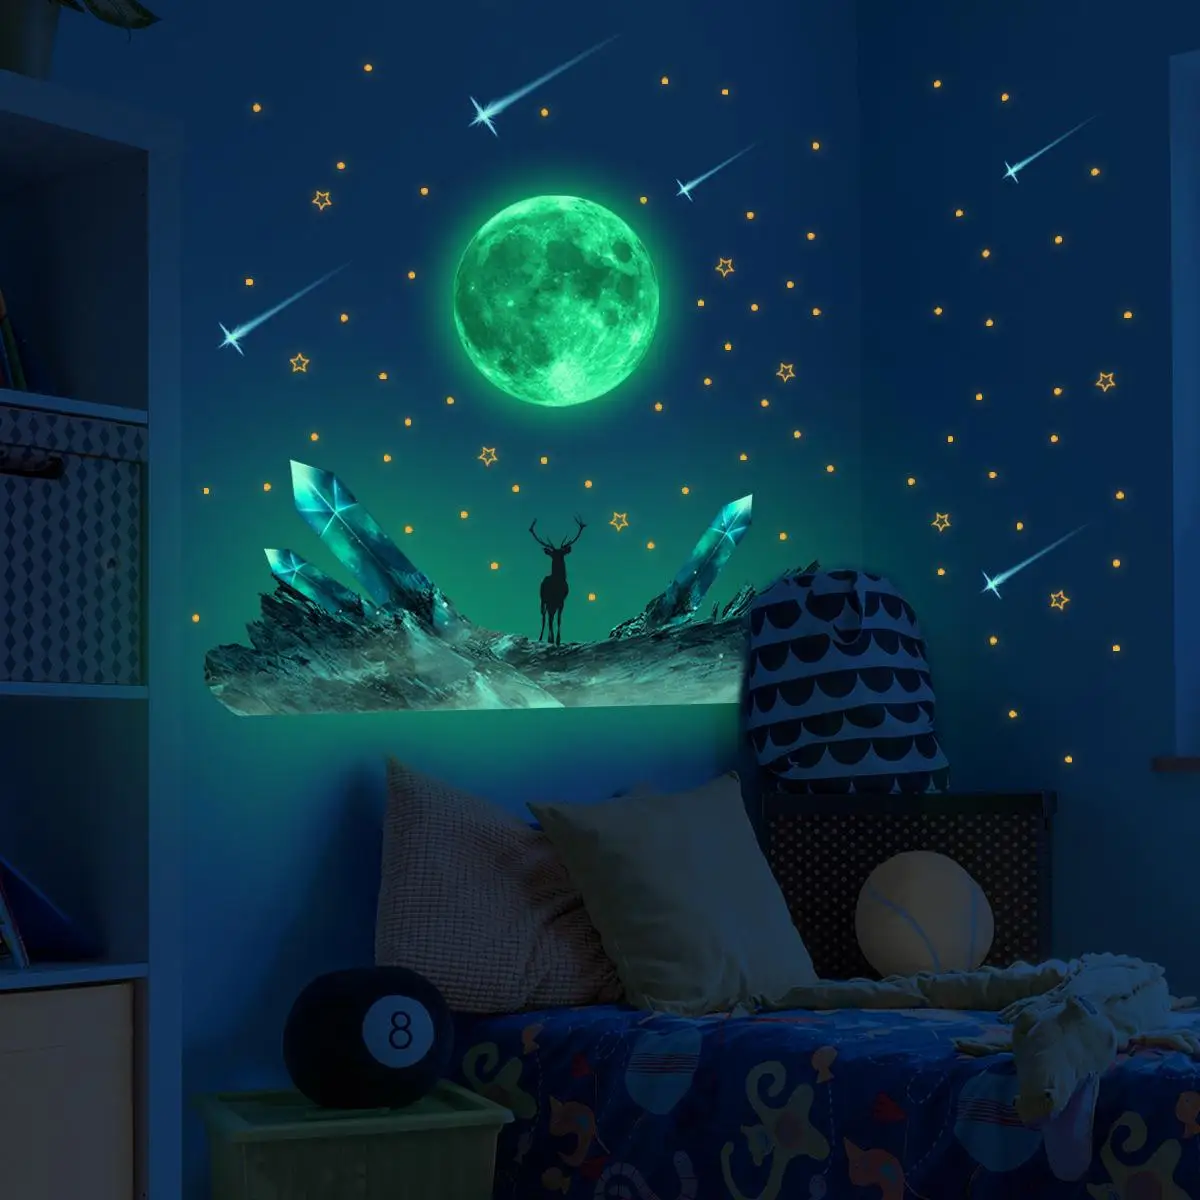 

Decals Wall Sticker Bedroom Home Décor Living Room Glow In The Dark Luminous Moon Stars 3D 40*18cm Art Ceiling